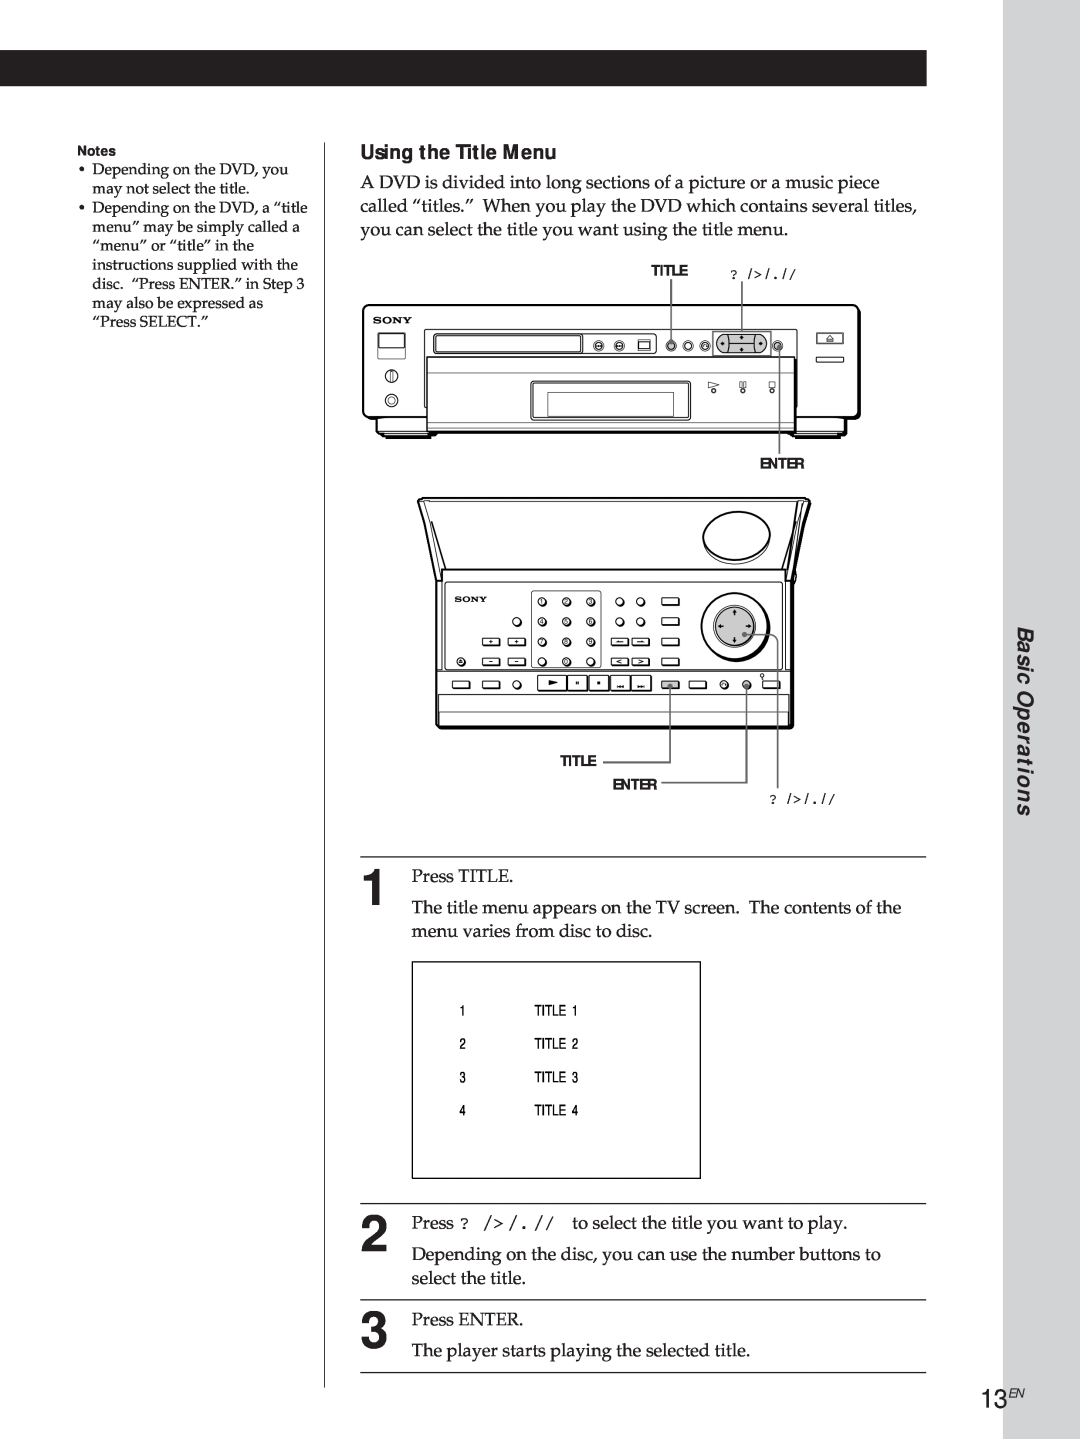 Sony DVP3980 manual 13EN, Operations, Using the Title Menu 